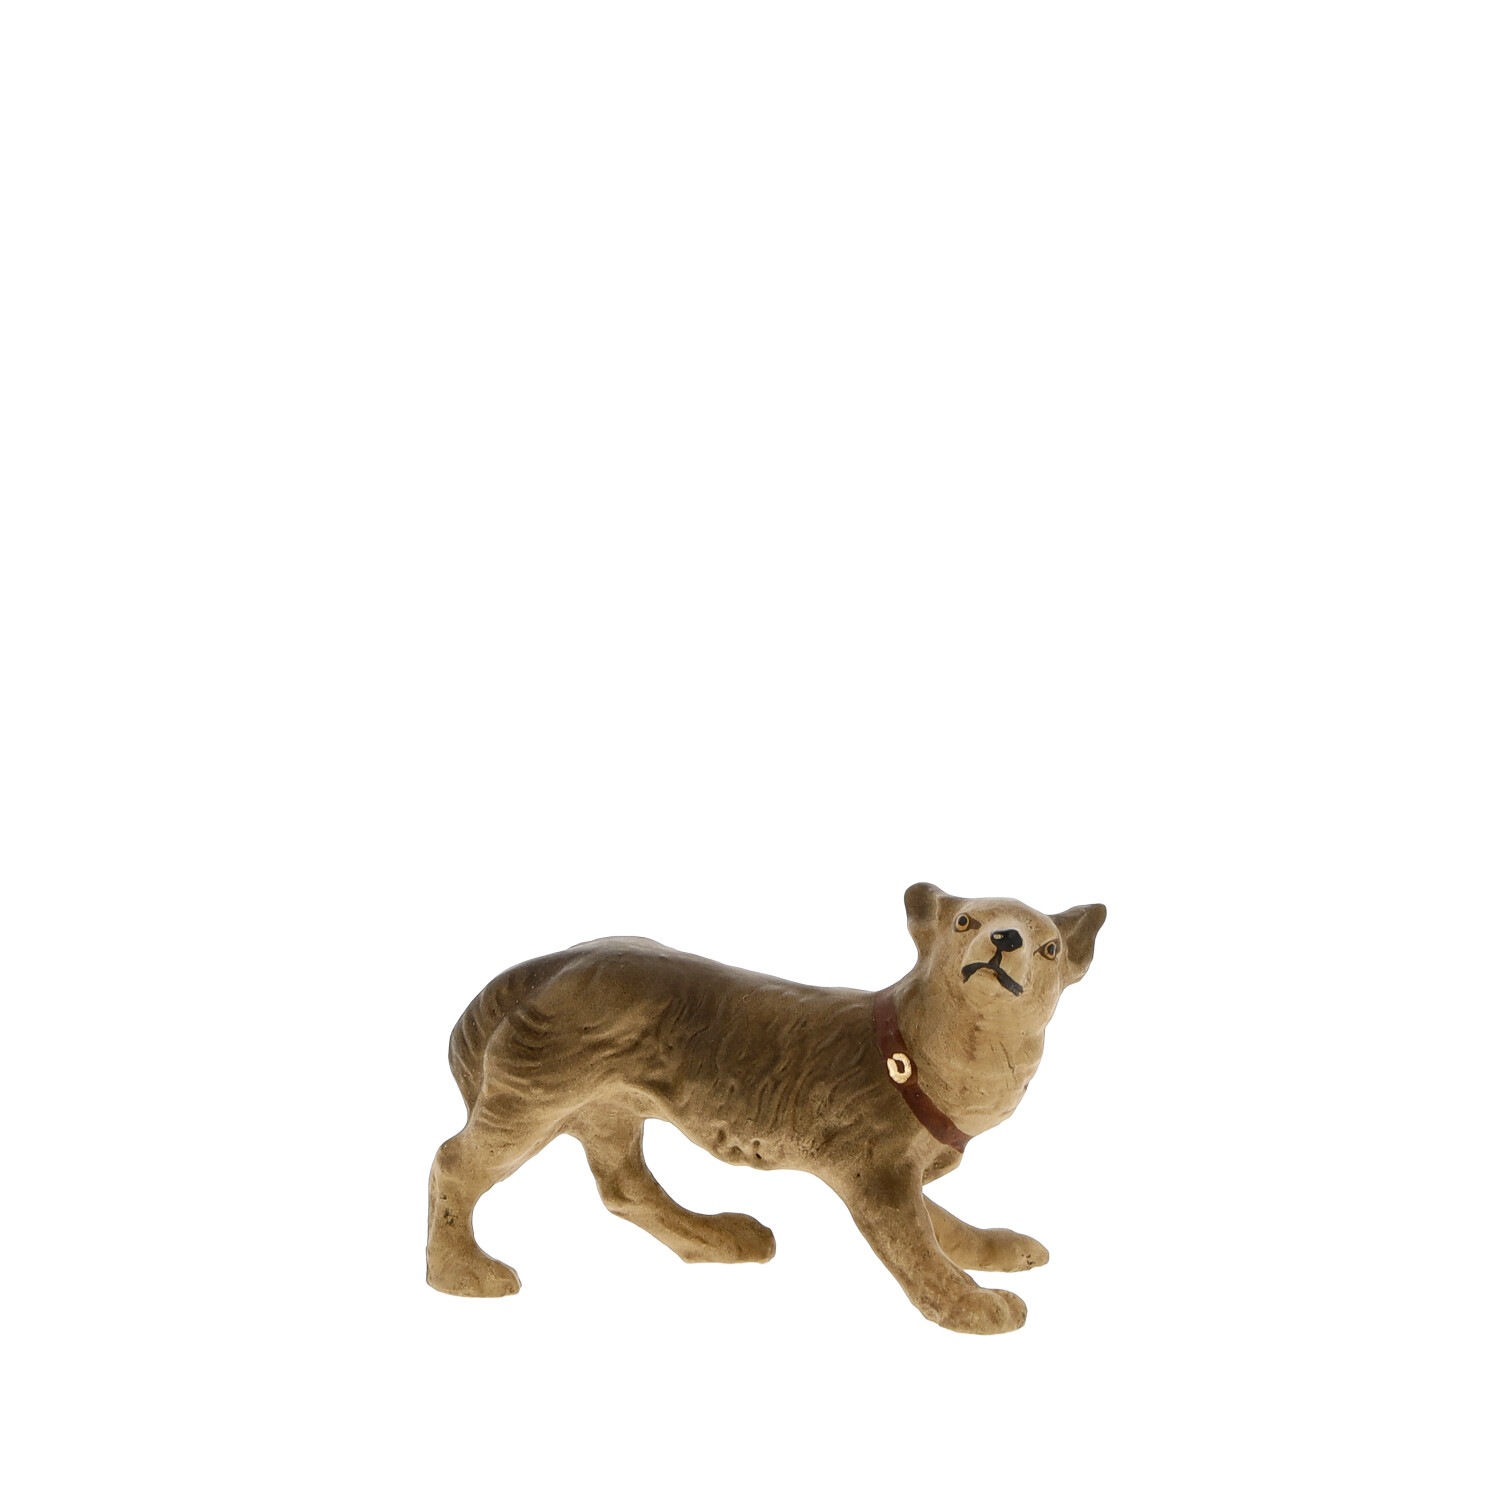 Scared sheep dog - Marolin Nativity figure - made in Germany